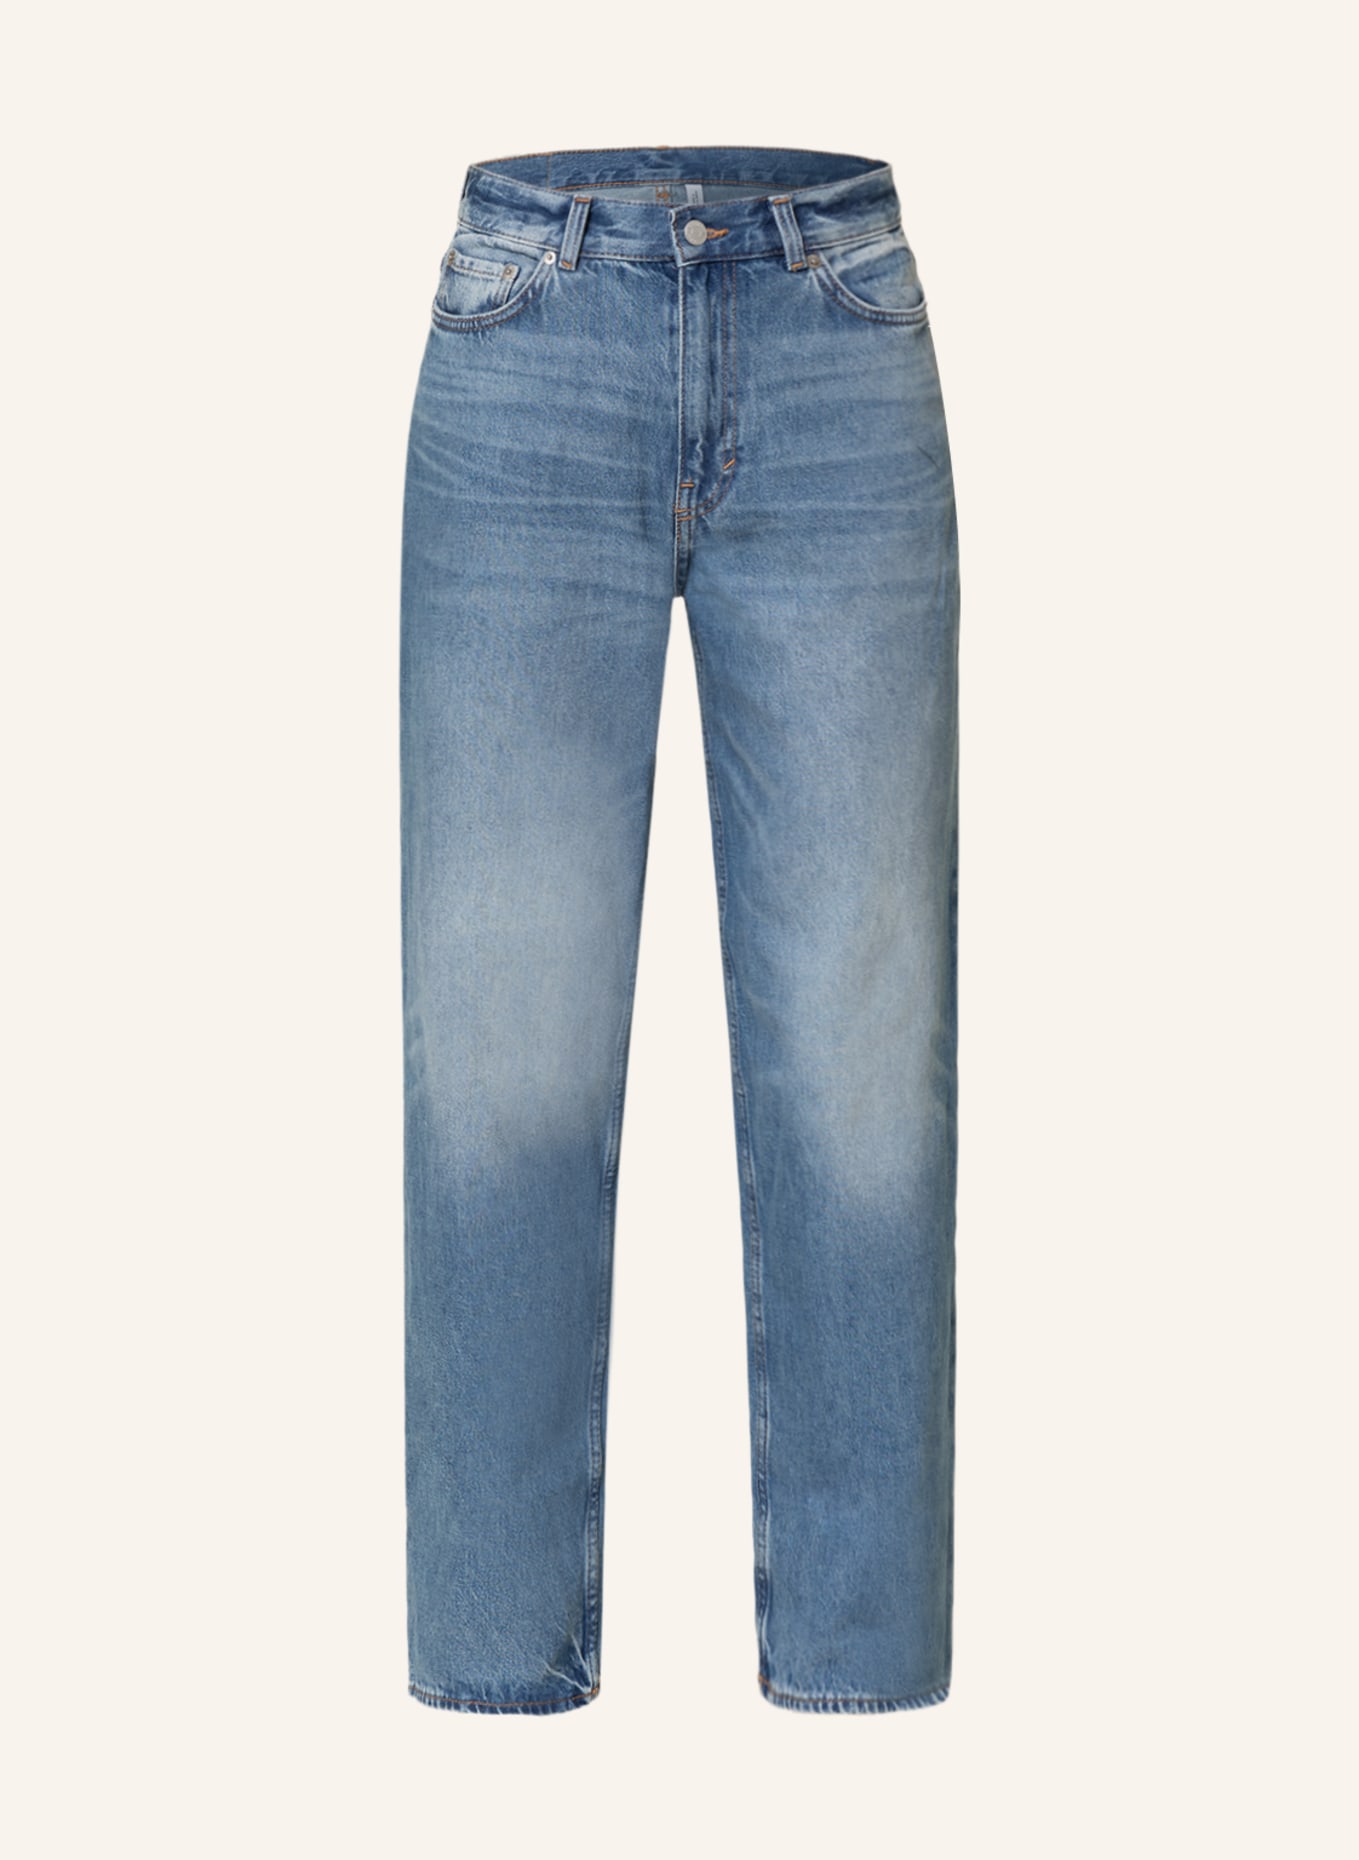 WEEKDAY Straight Jeans RAIL, Farbe: Seventeen blue (Bild 1)